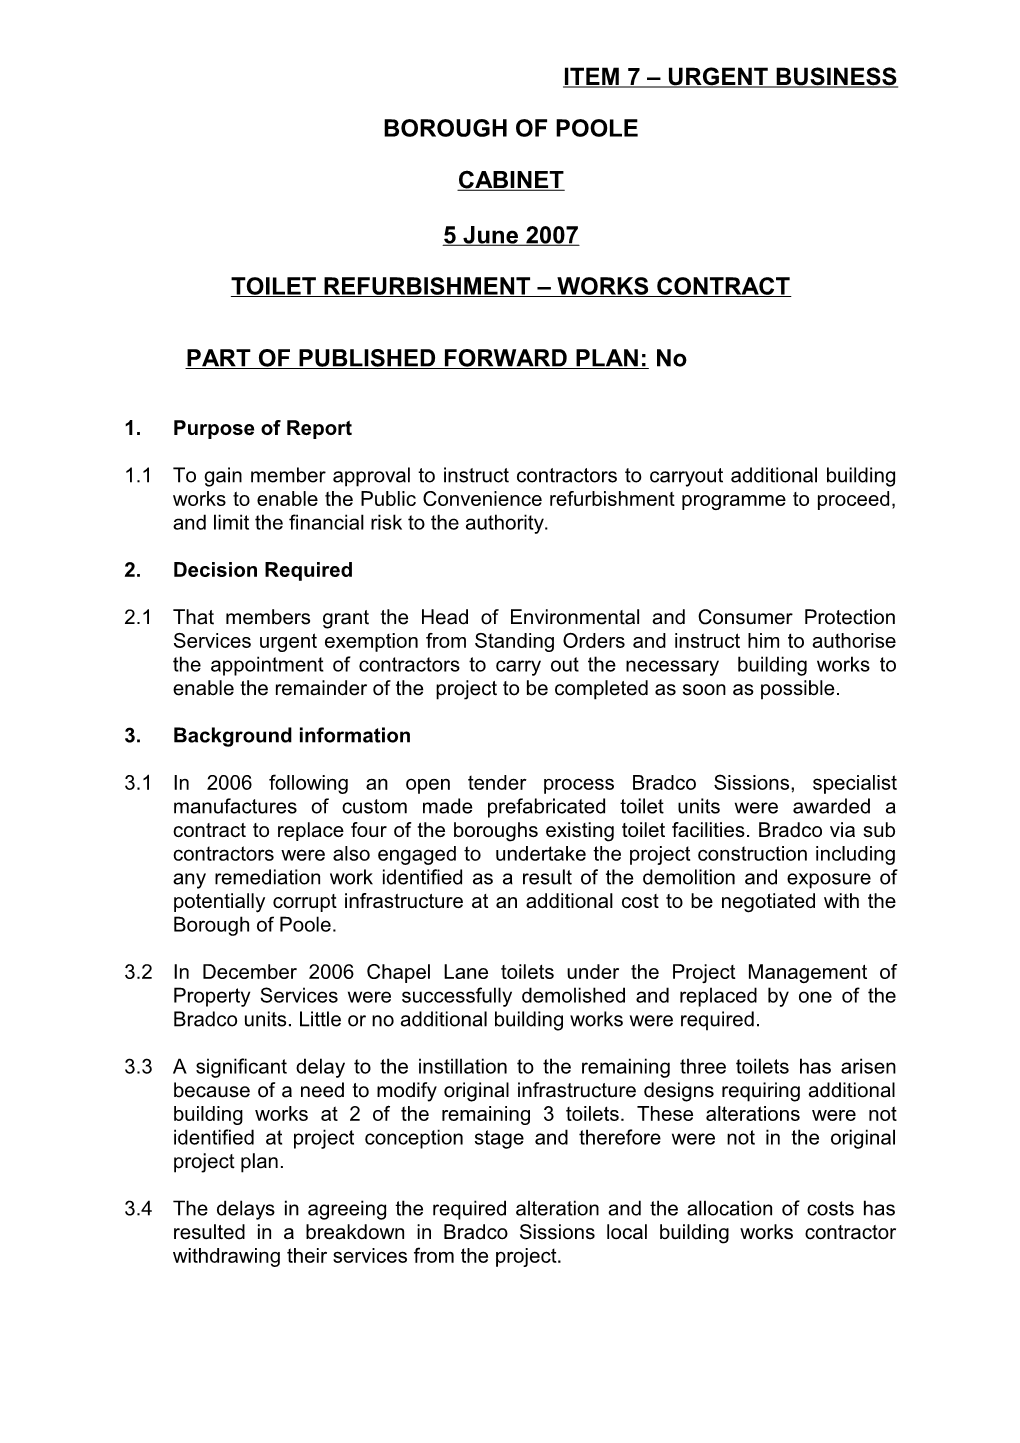 Toilet Refurbishment - Works Contract